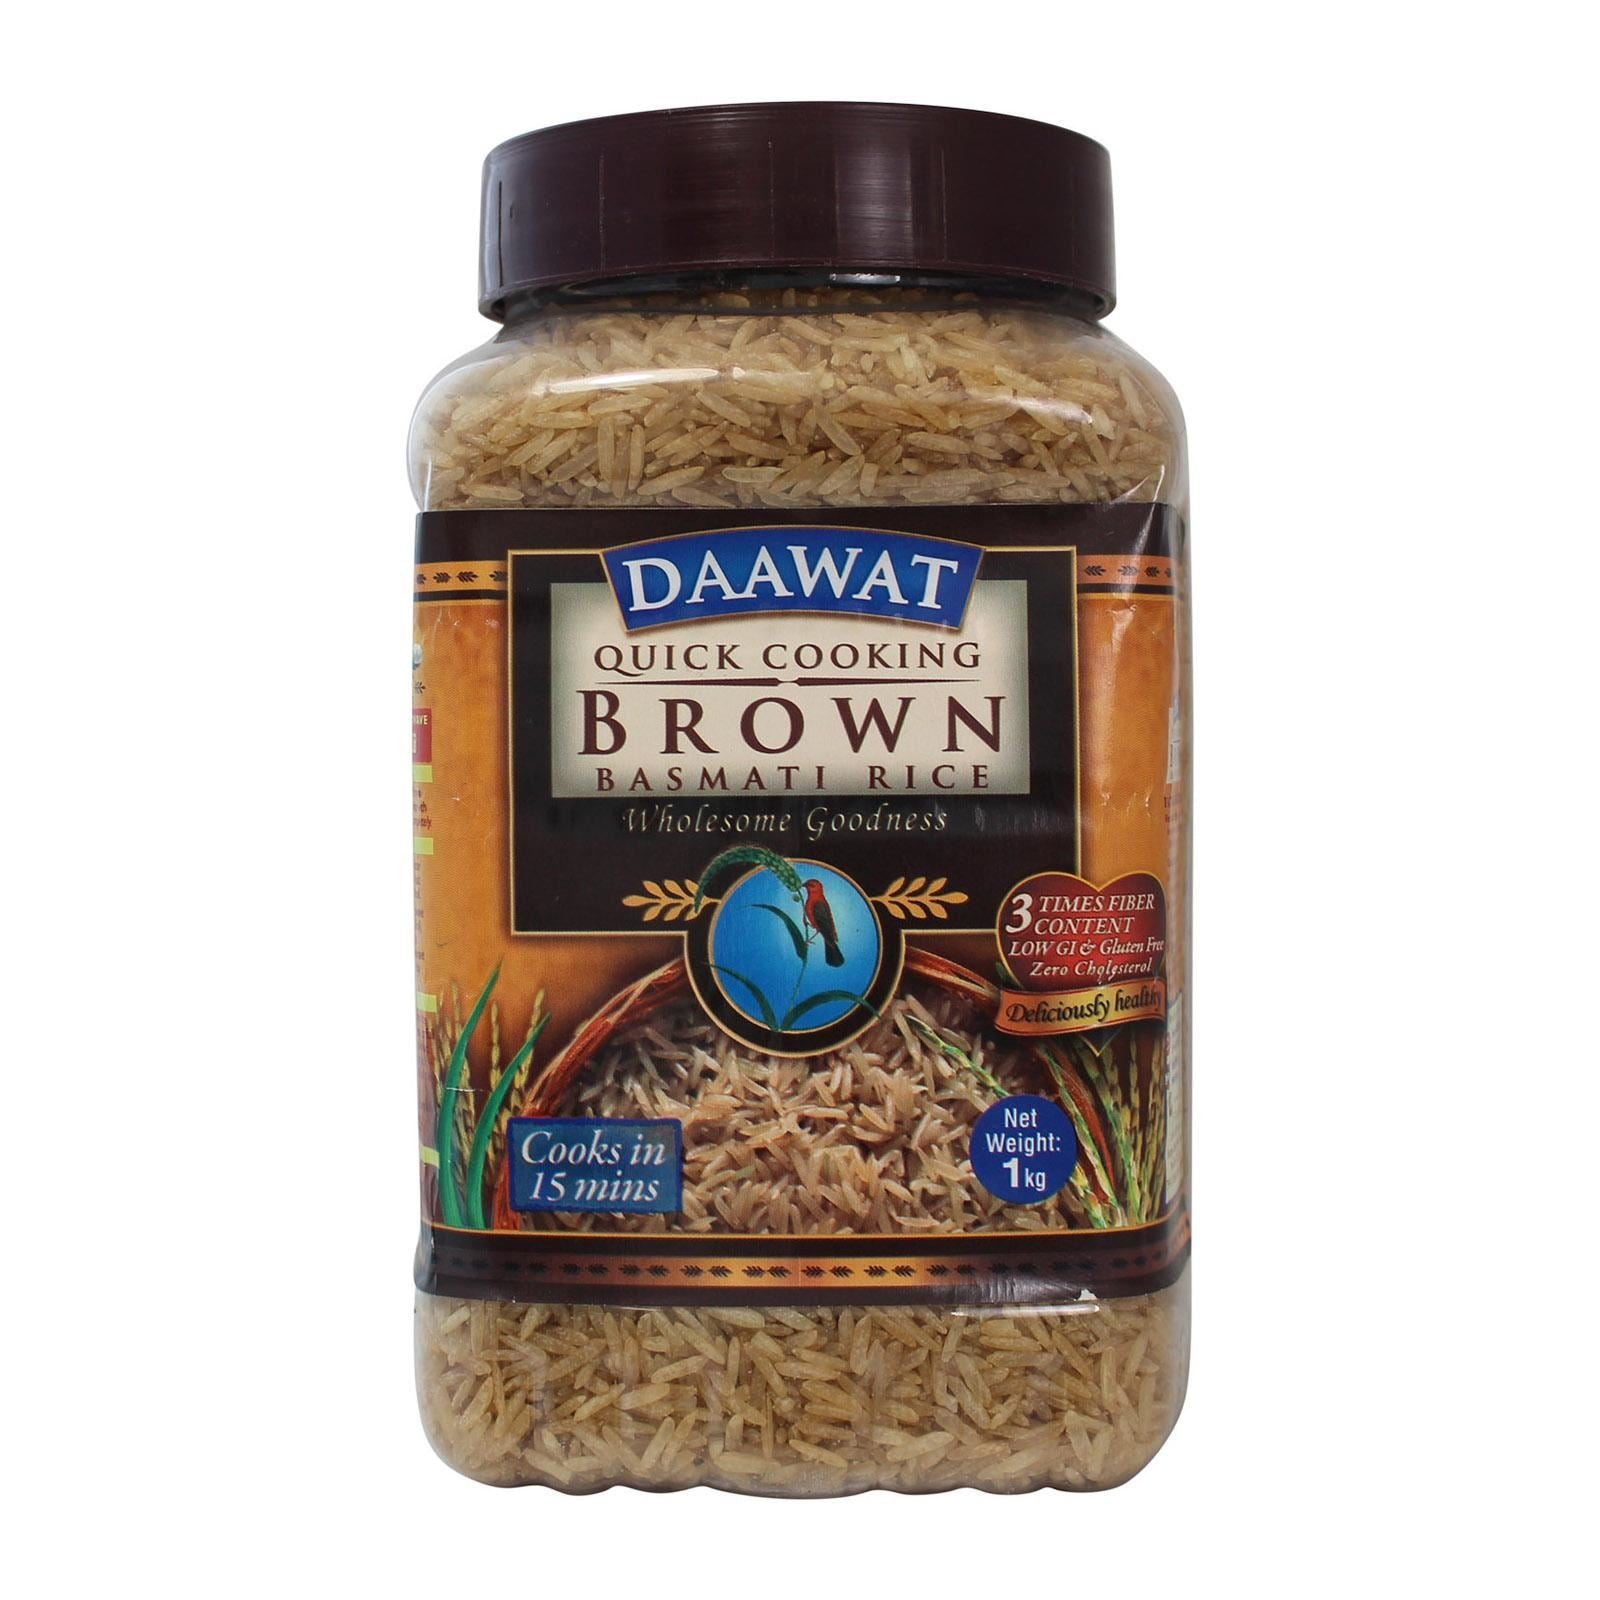 DAAWAT Quick Cooking Brown Basmati Rice JAR